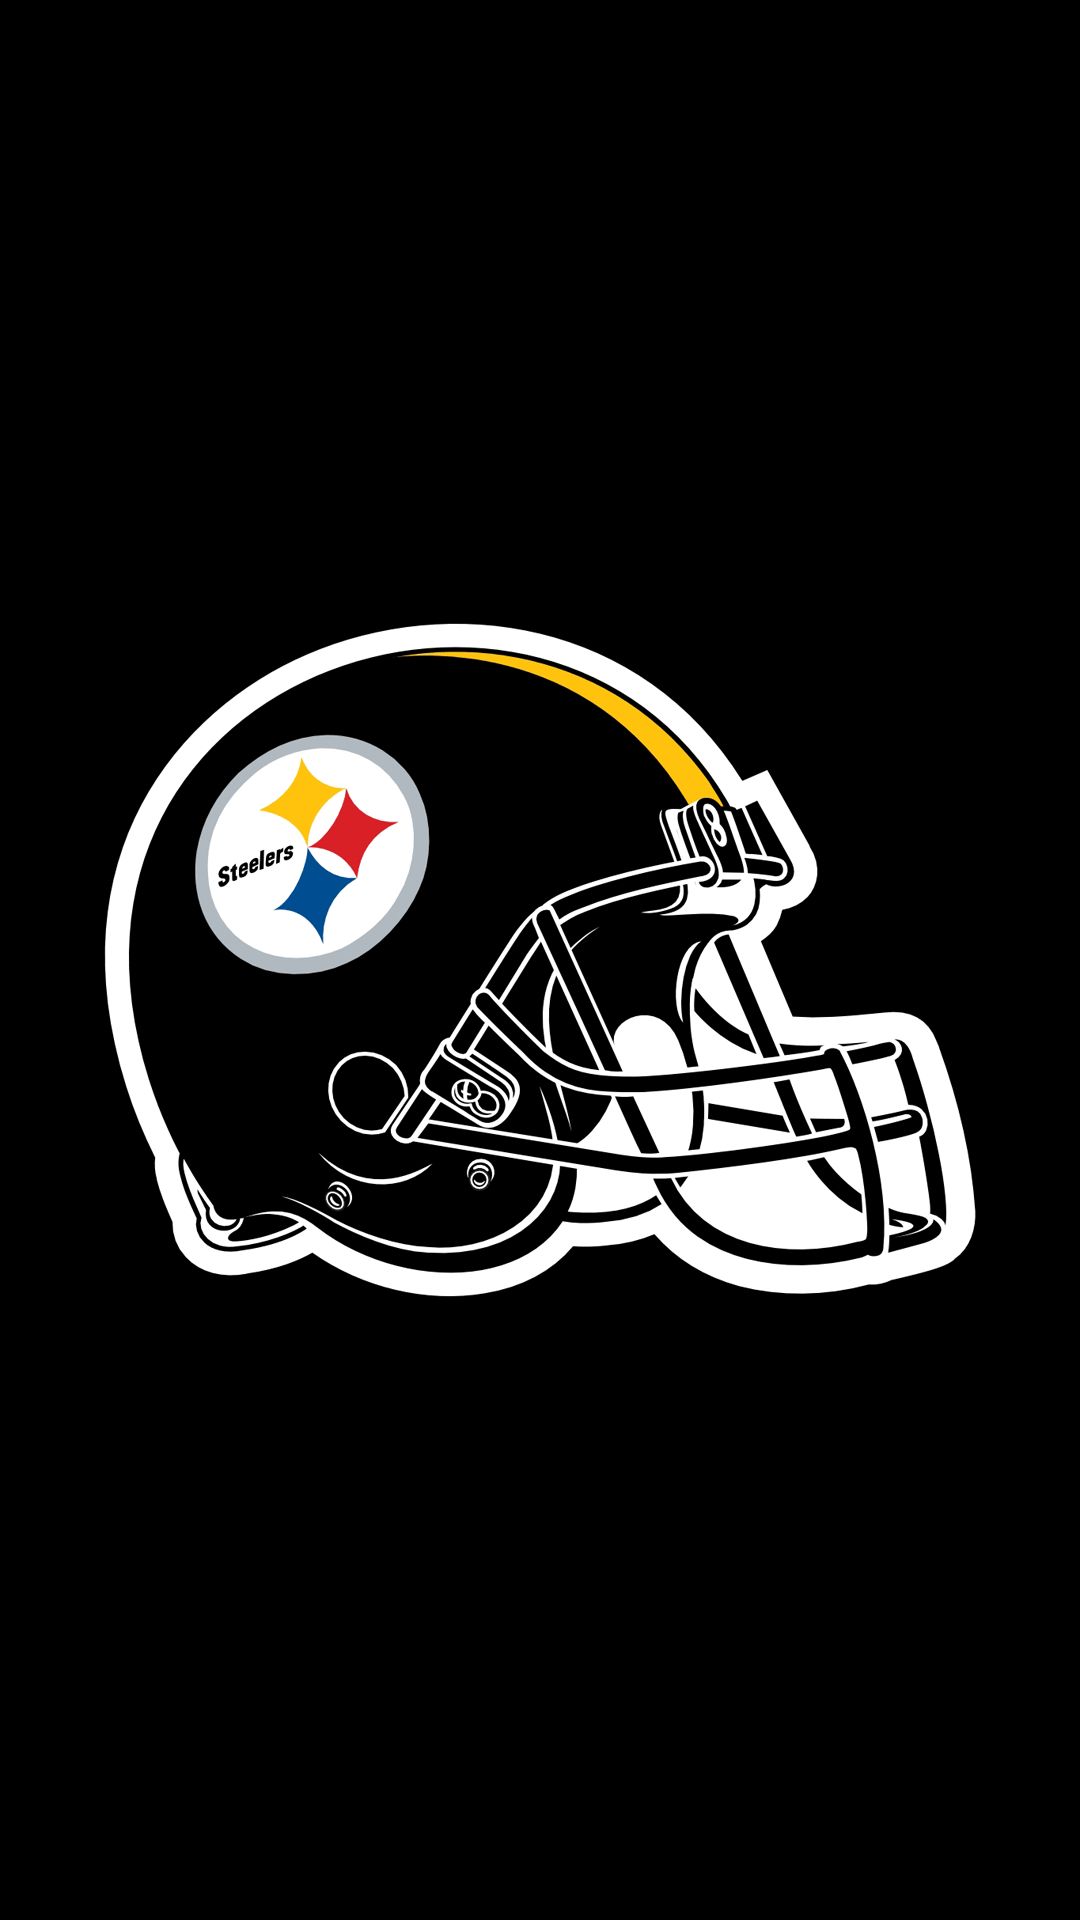 Pittsburgh Steelers Logo iPhone Wallpaper - Wallpaperboat